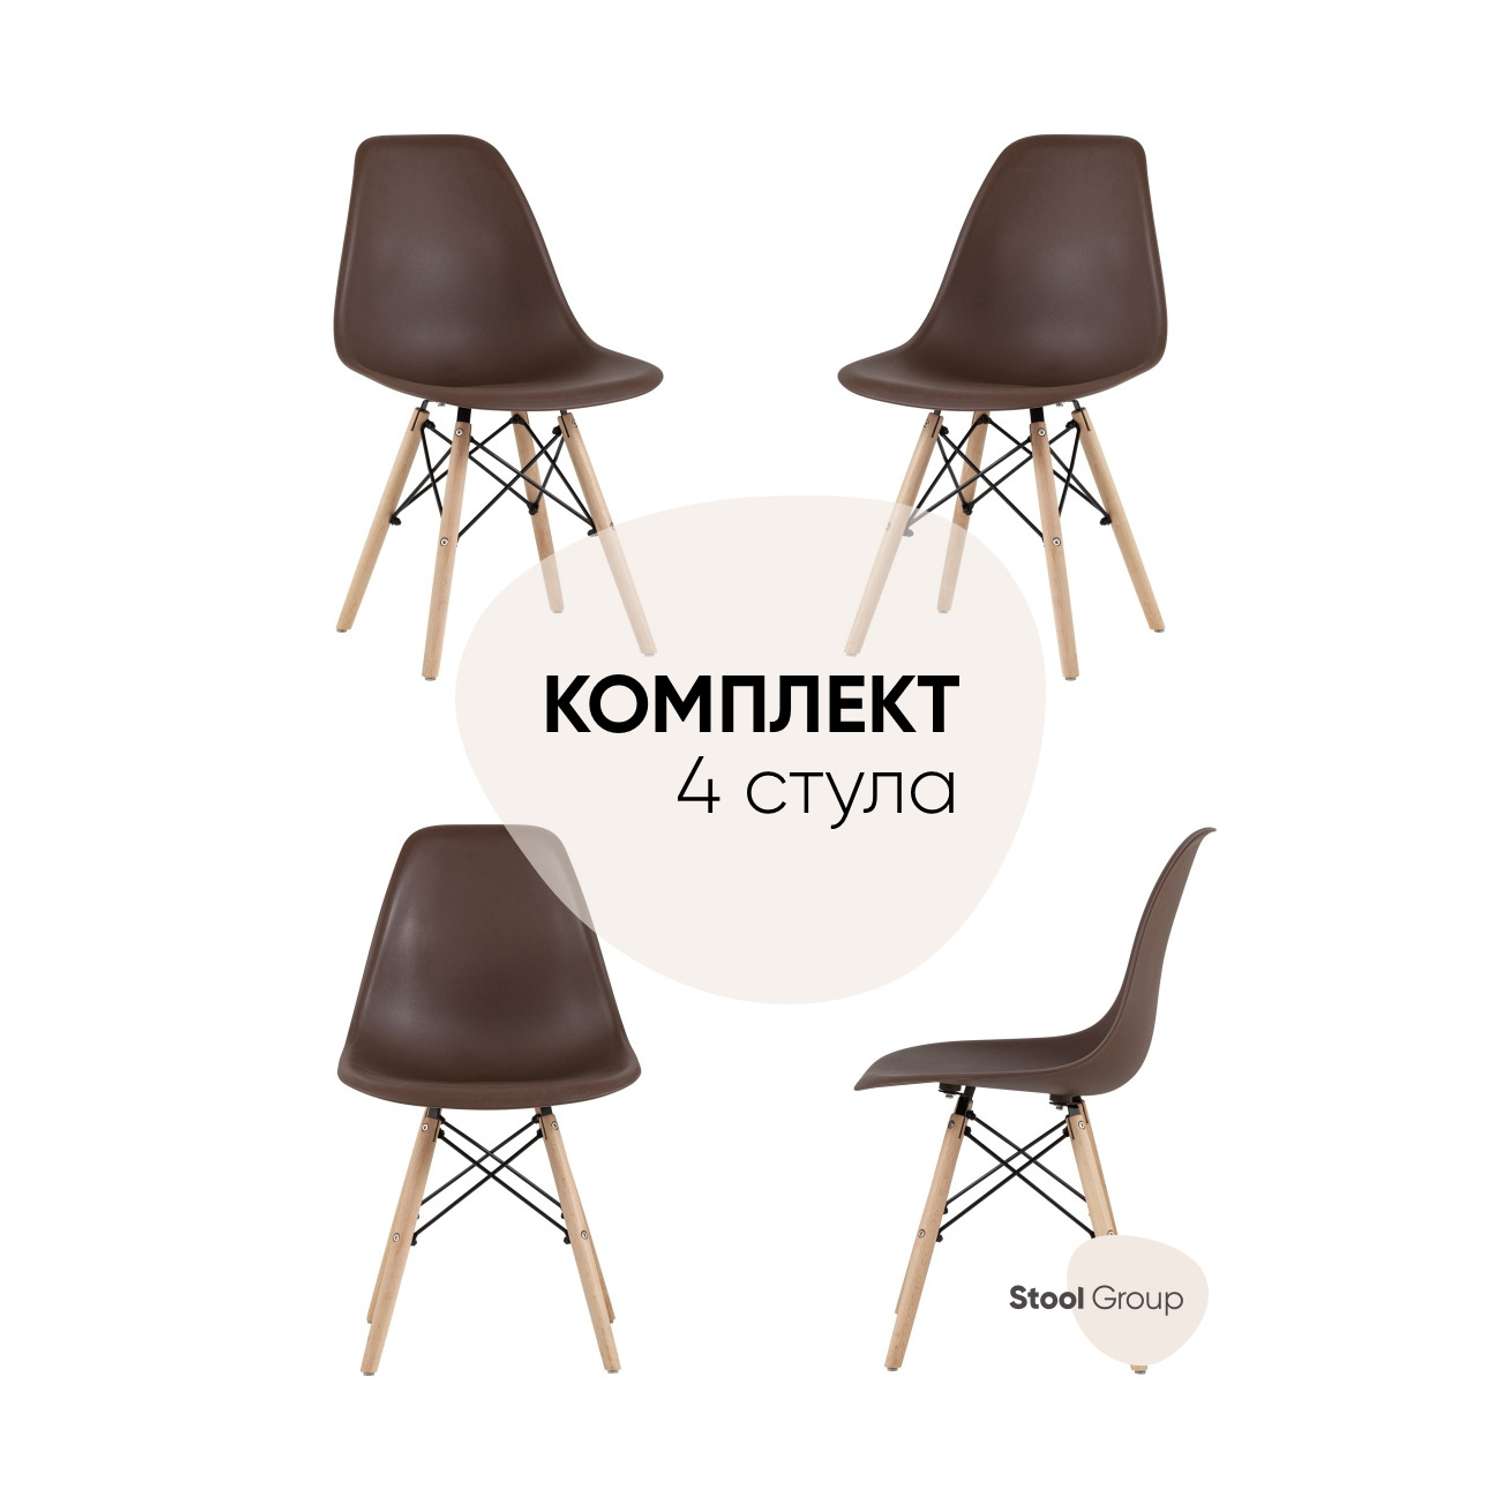 Комплект стульев Stool Group DSW Style коричневый - фото 1